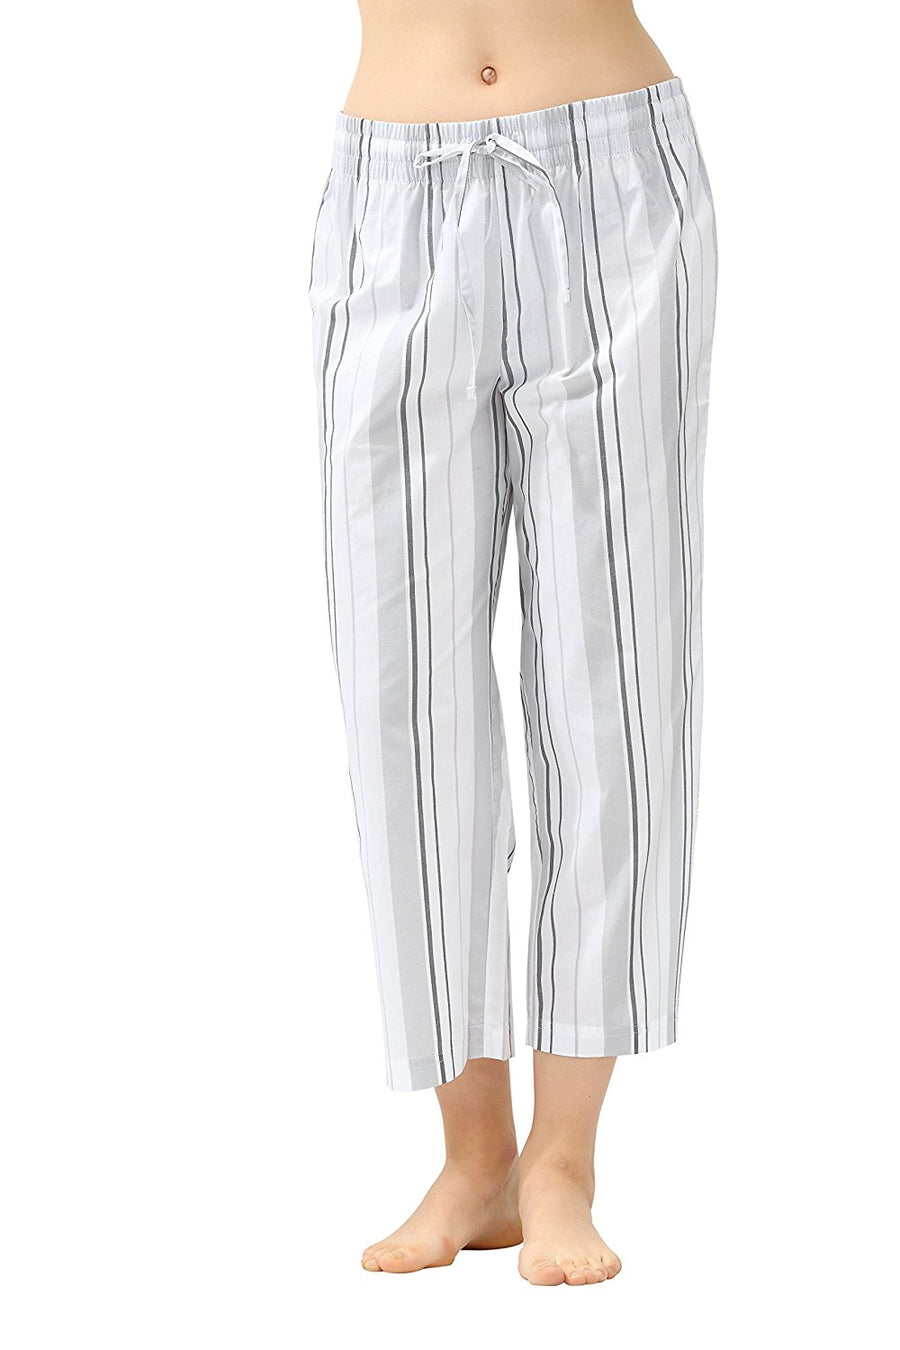 CYZ Women's 100% Cotton Woven Pajama Capri